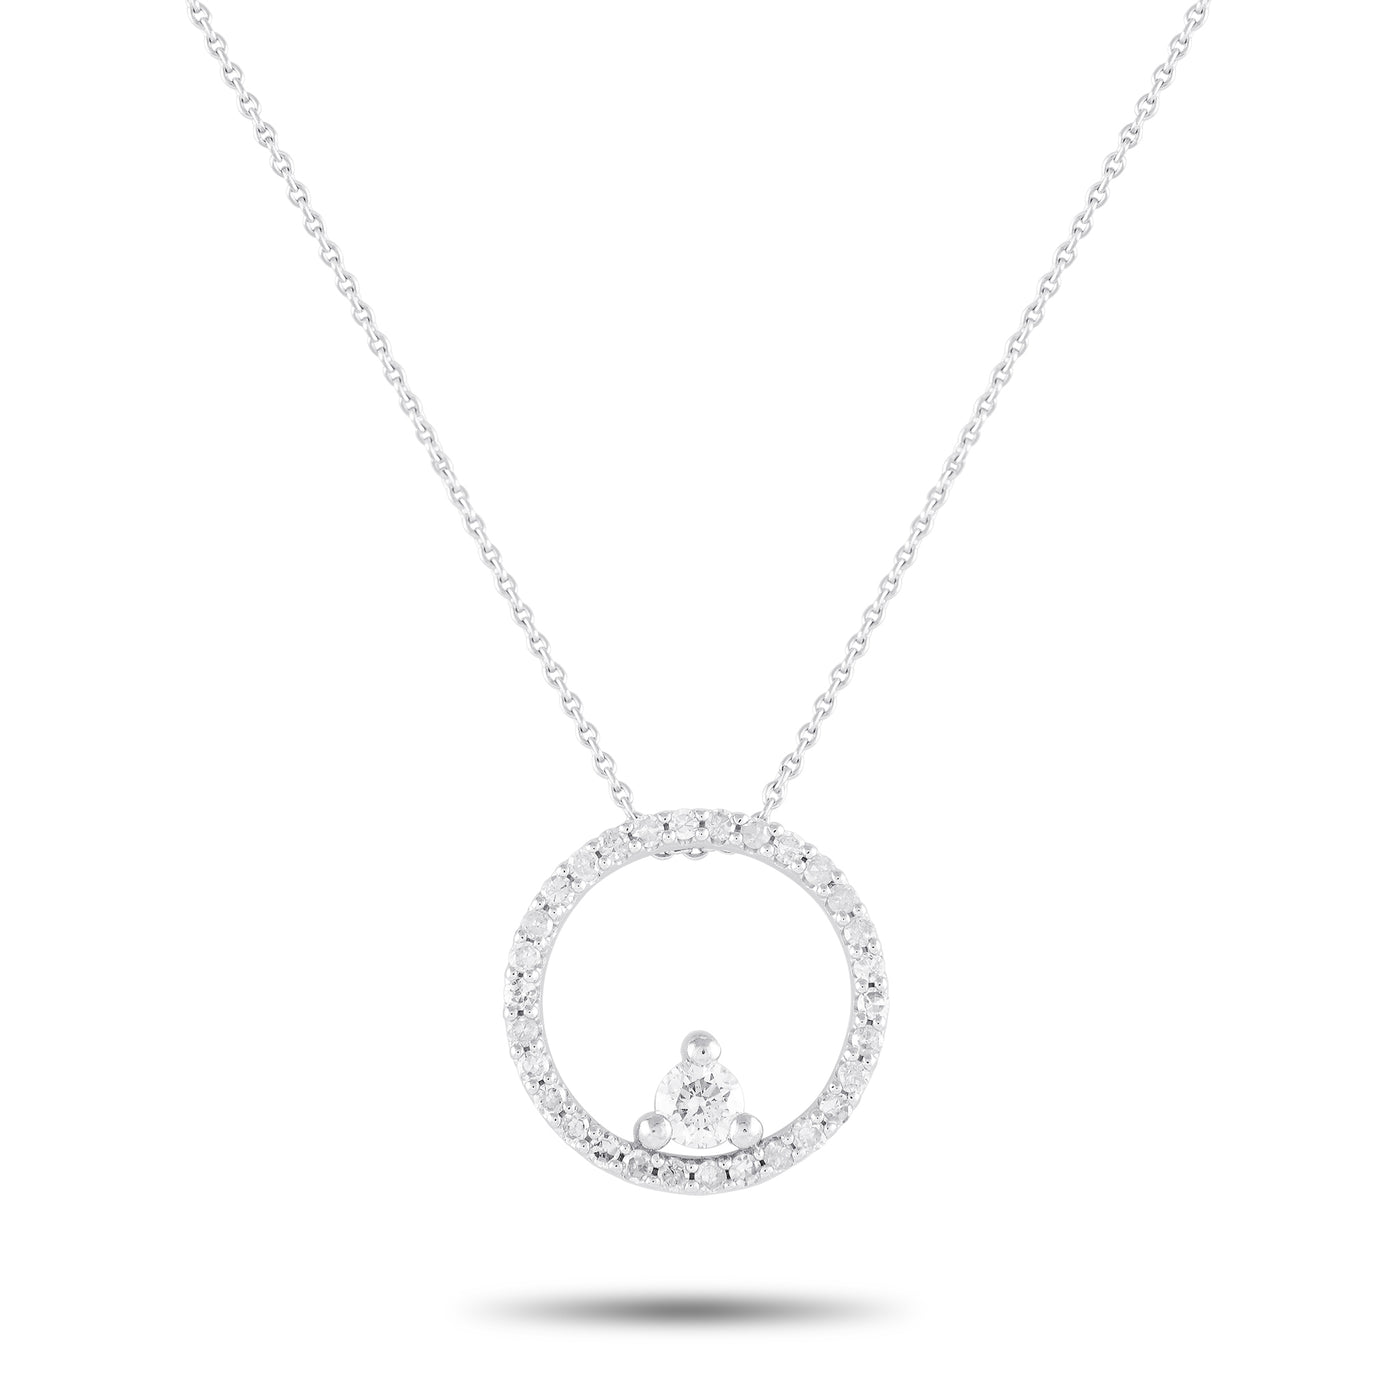 14K White Gold 0.25ct Diamond Necklace